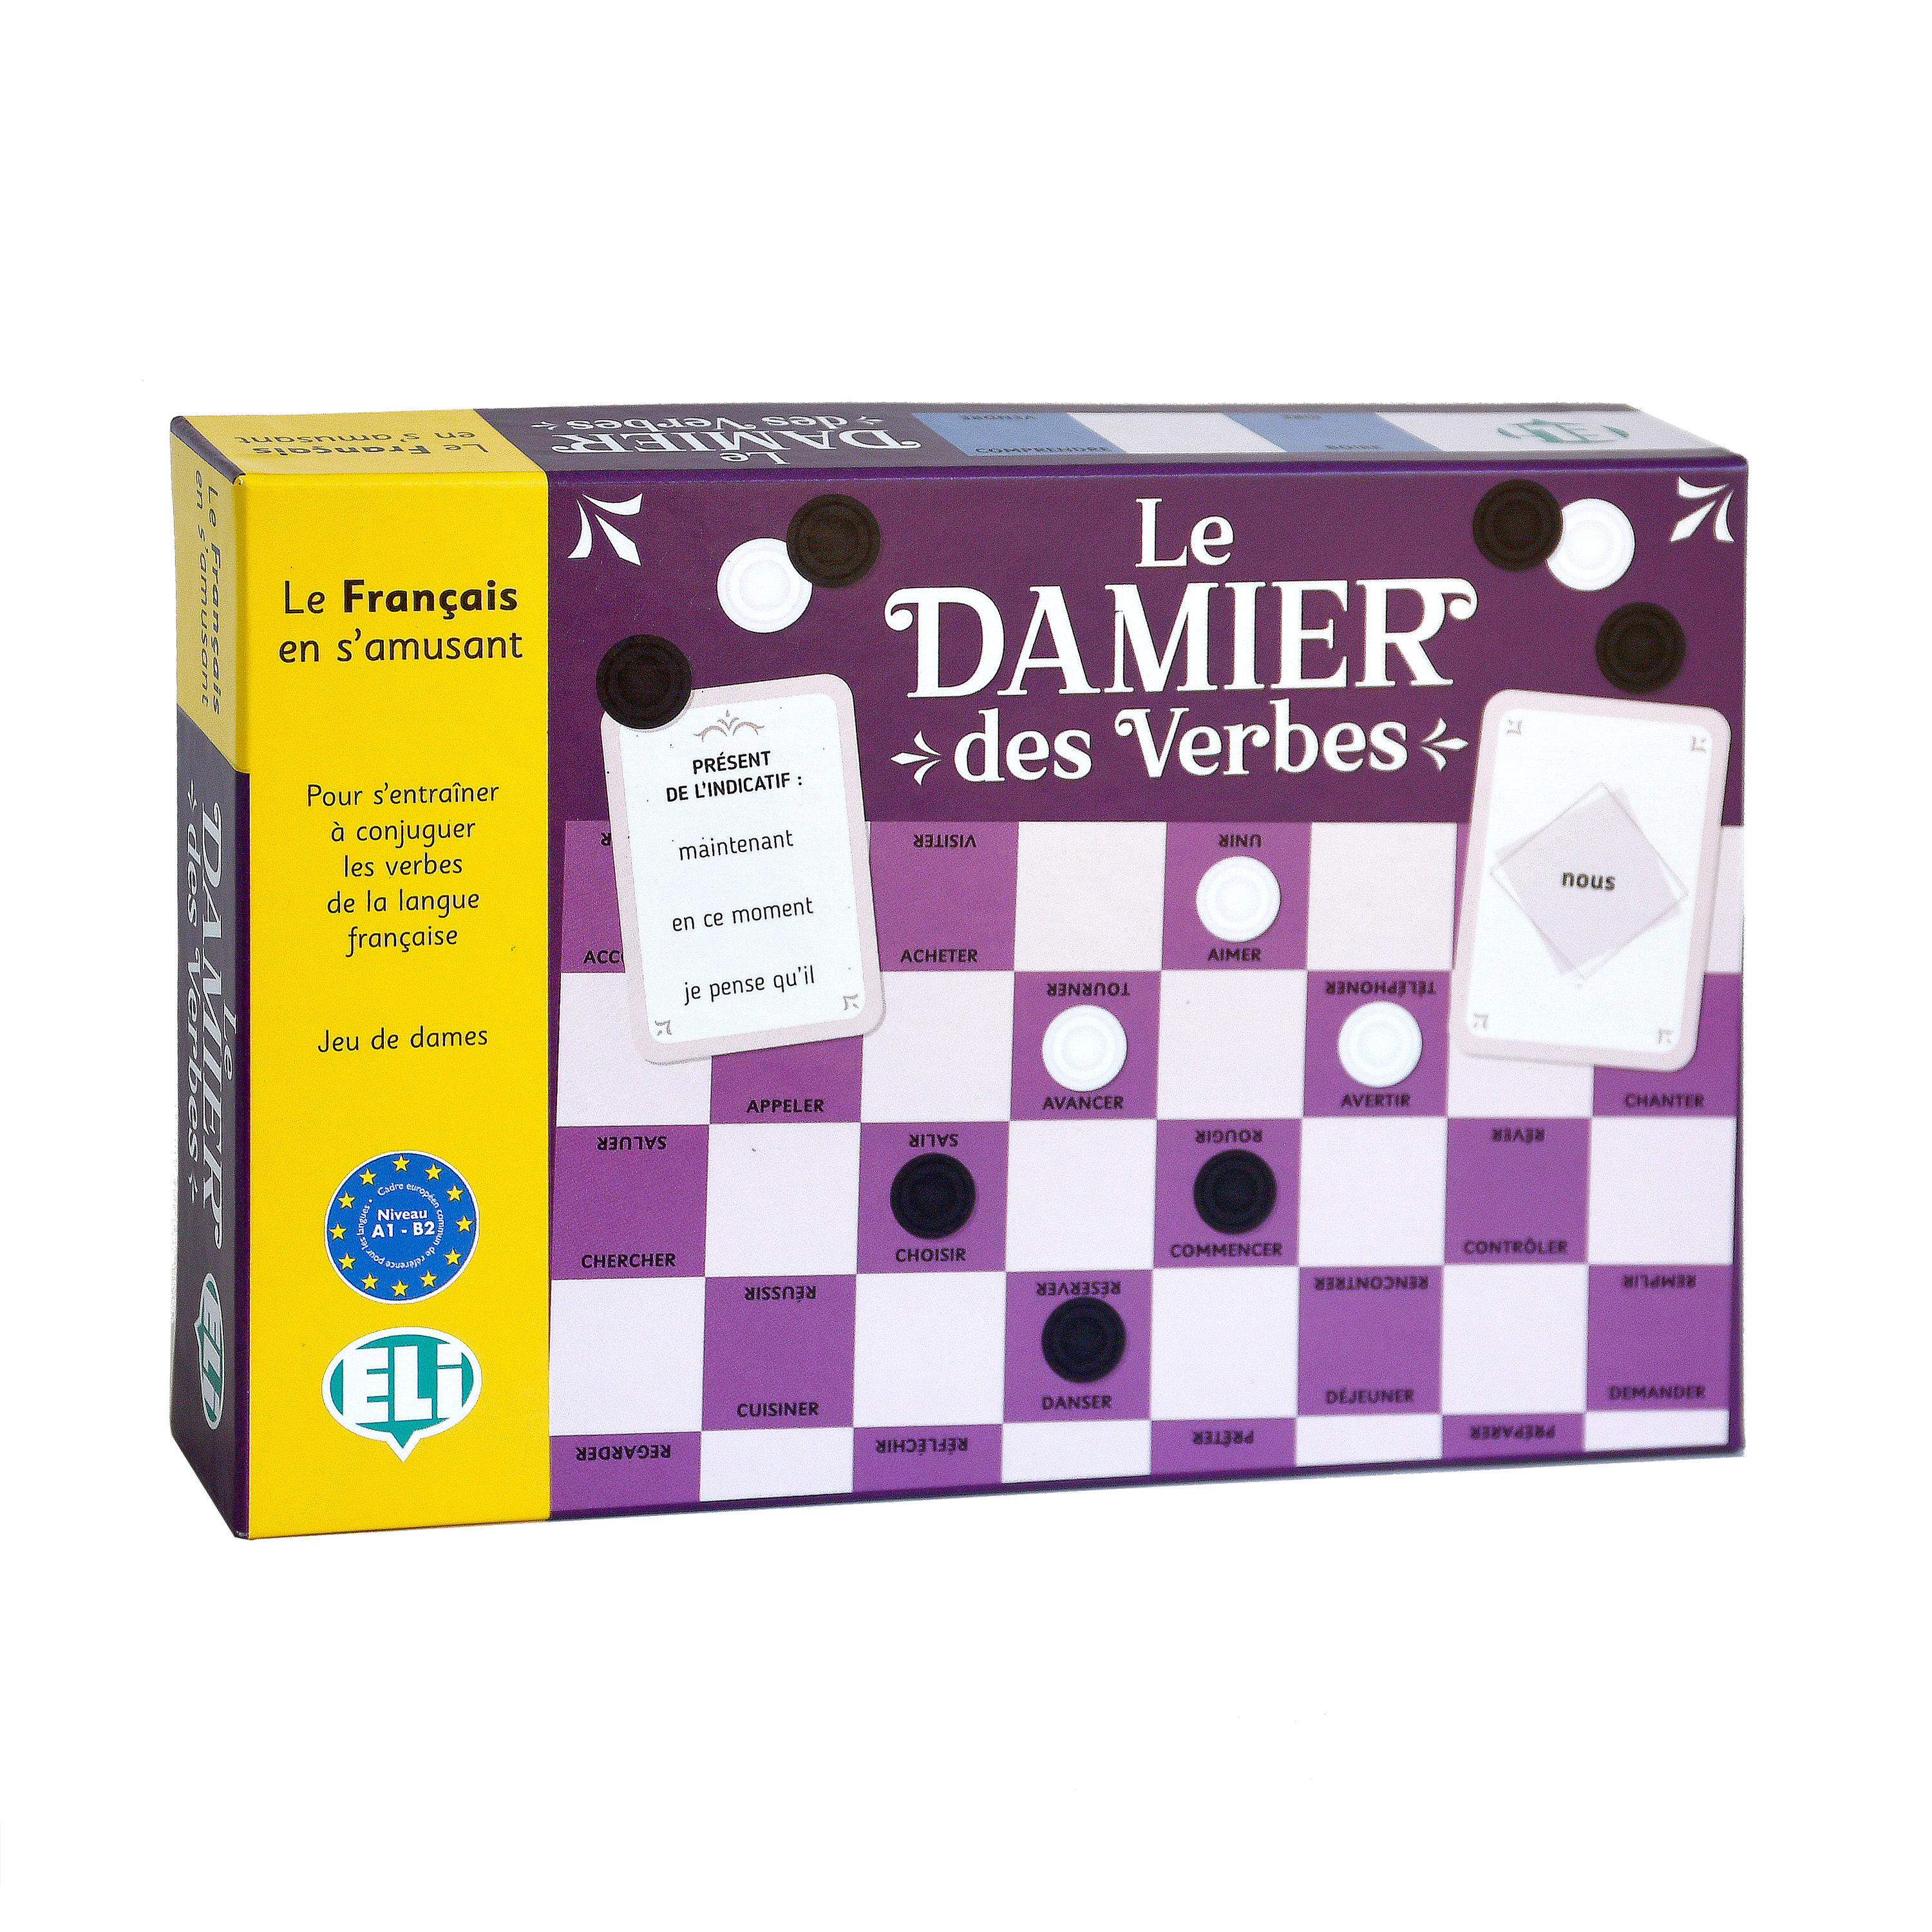 Le damier des verbes French Game